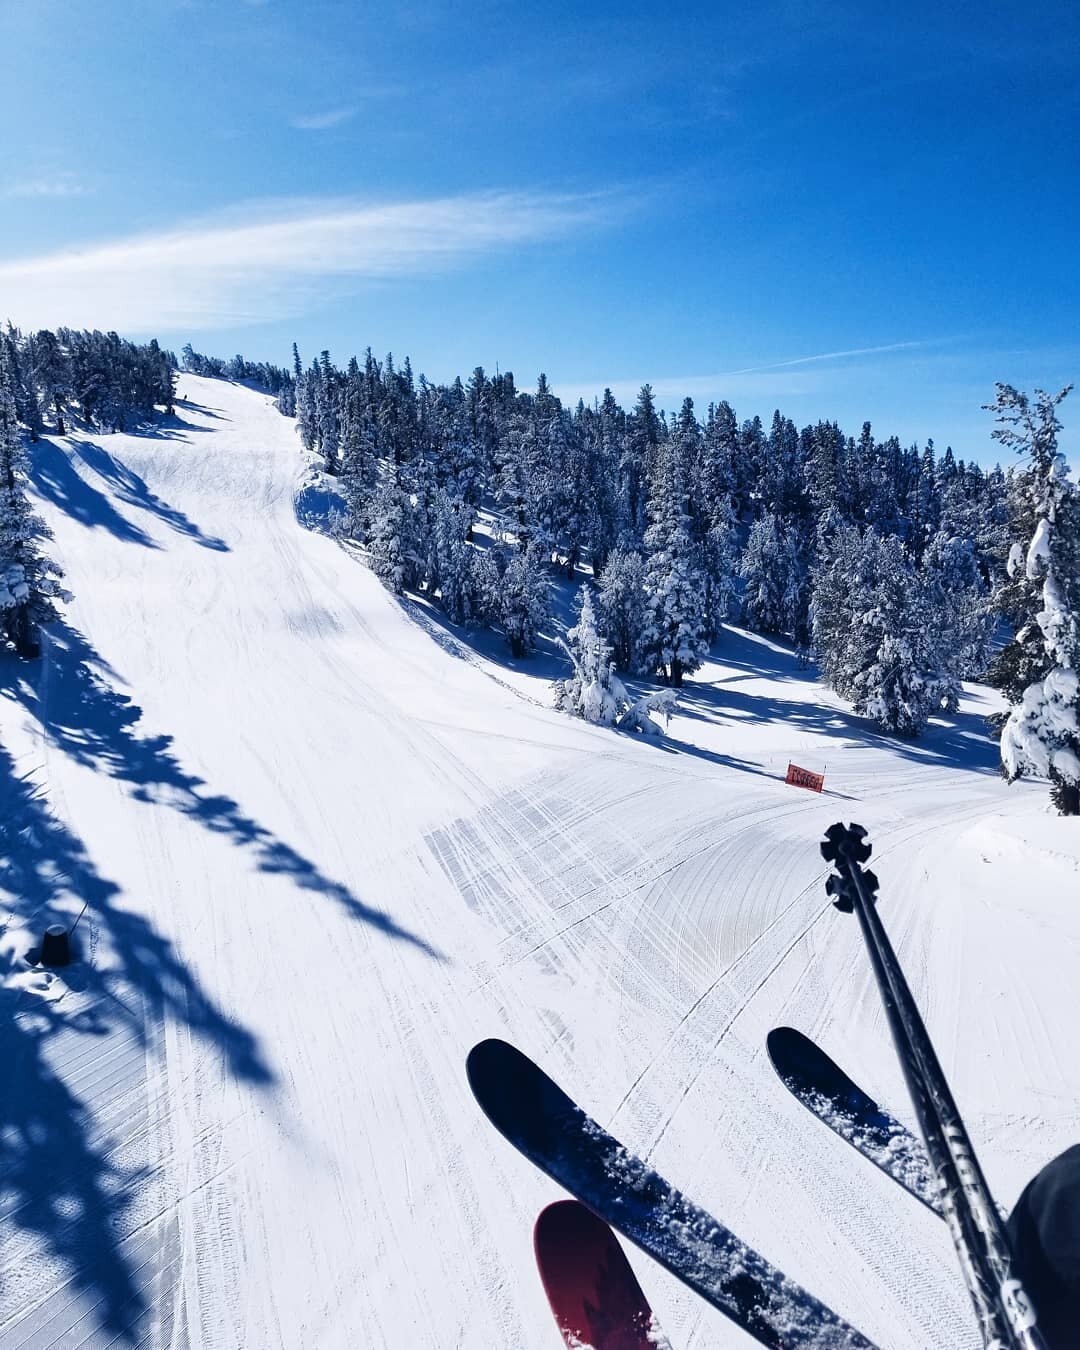 This is what a blue-bird day truly looks like. 😍❄ #skiheavenly #ski #tahoe #wintertahoe